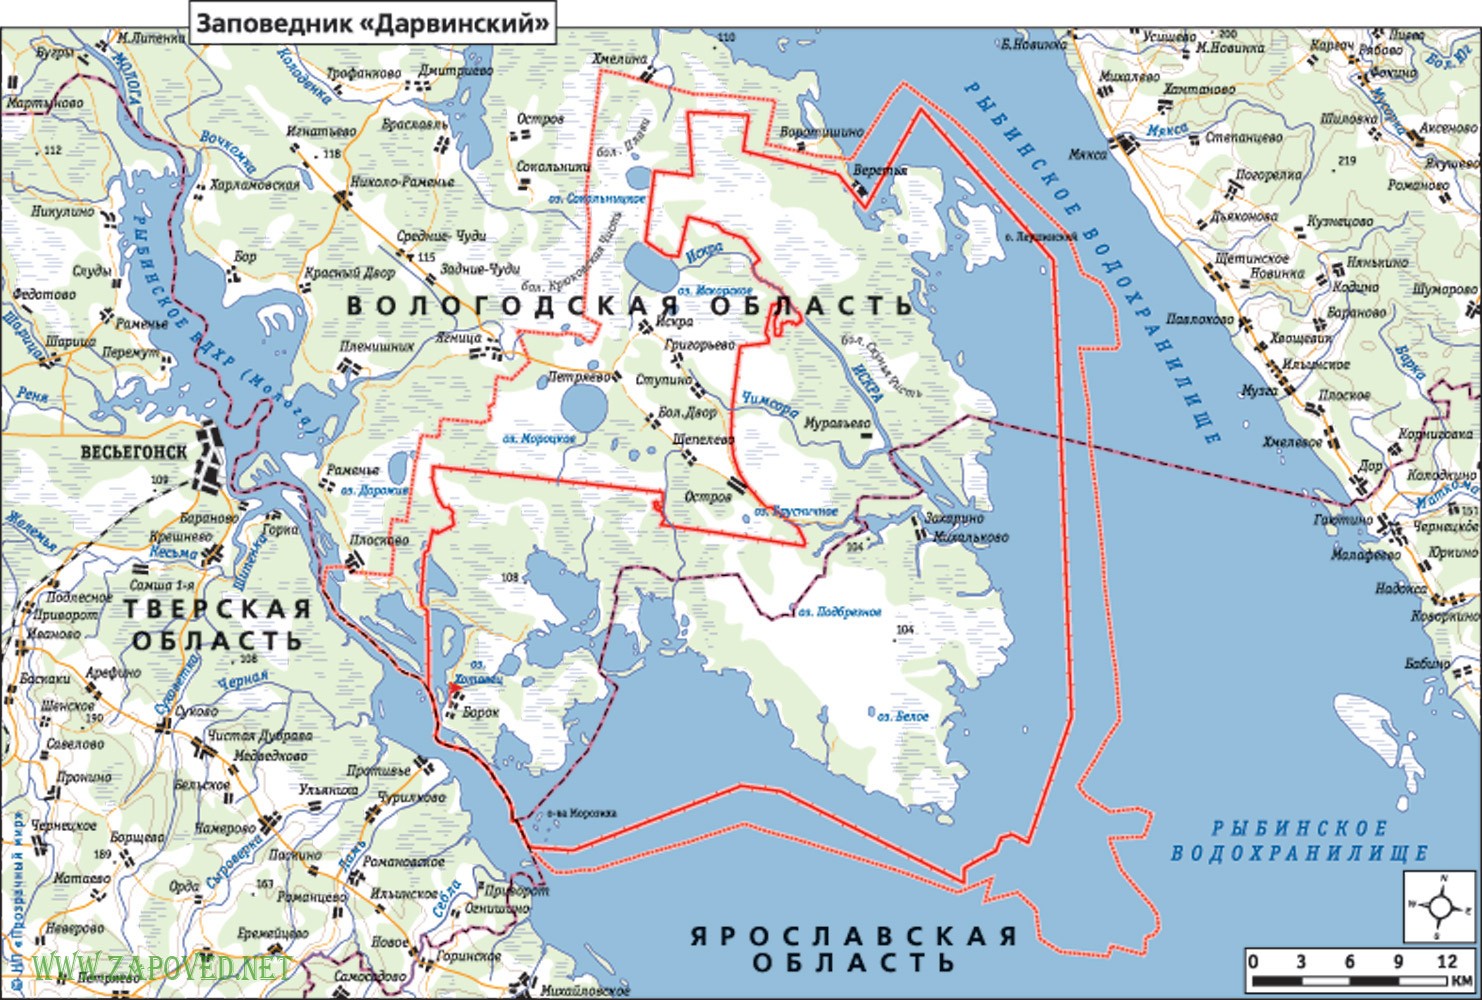 Дарвинский заповедник Вологодской области на карте